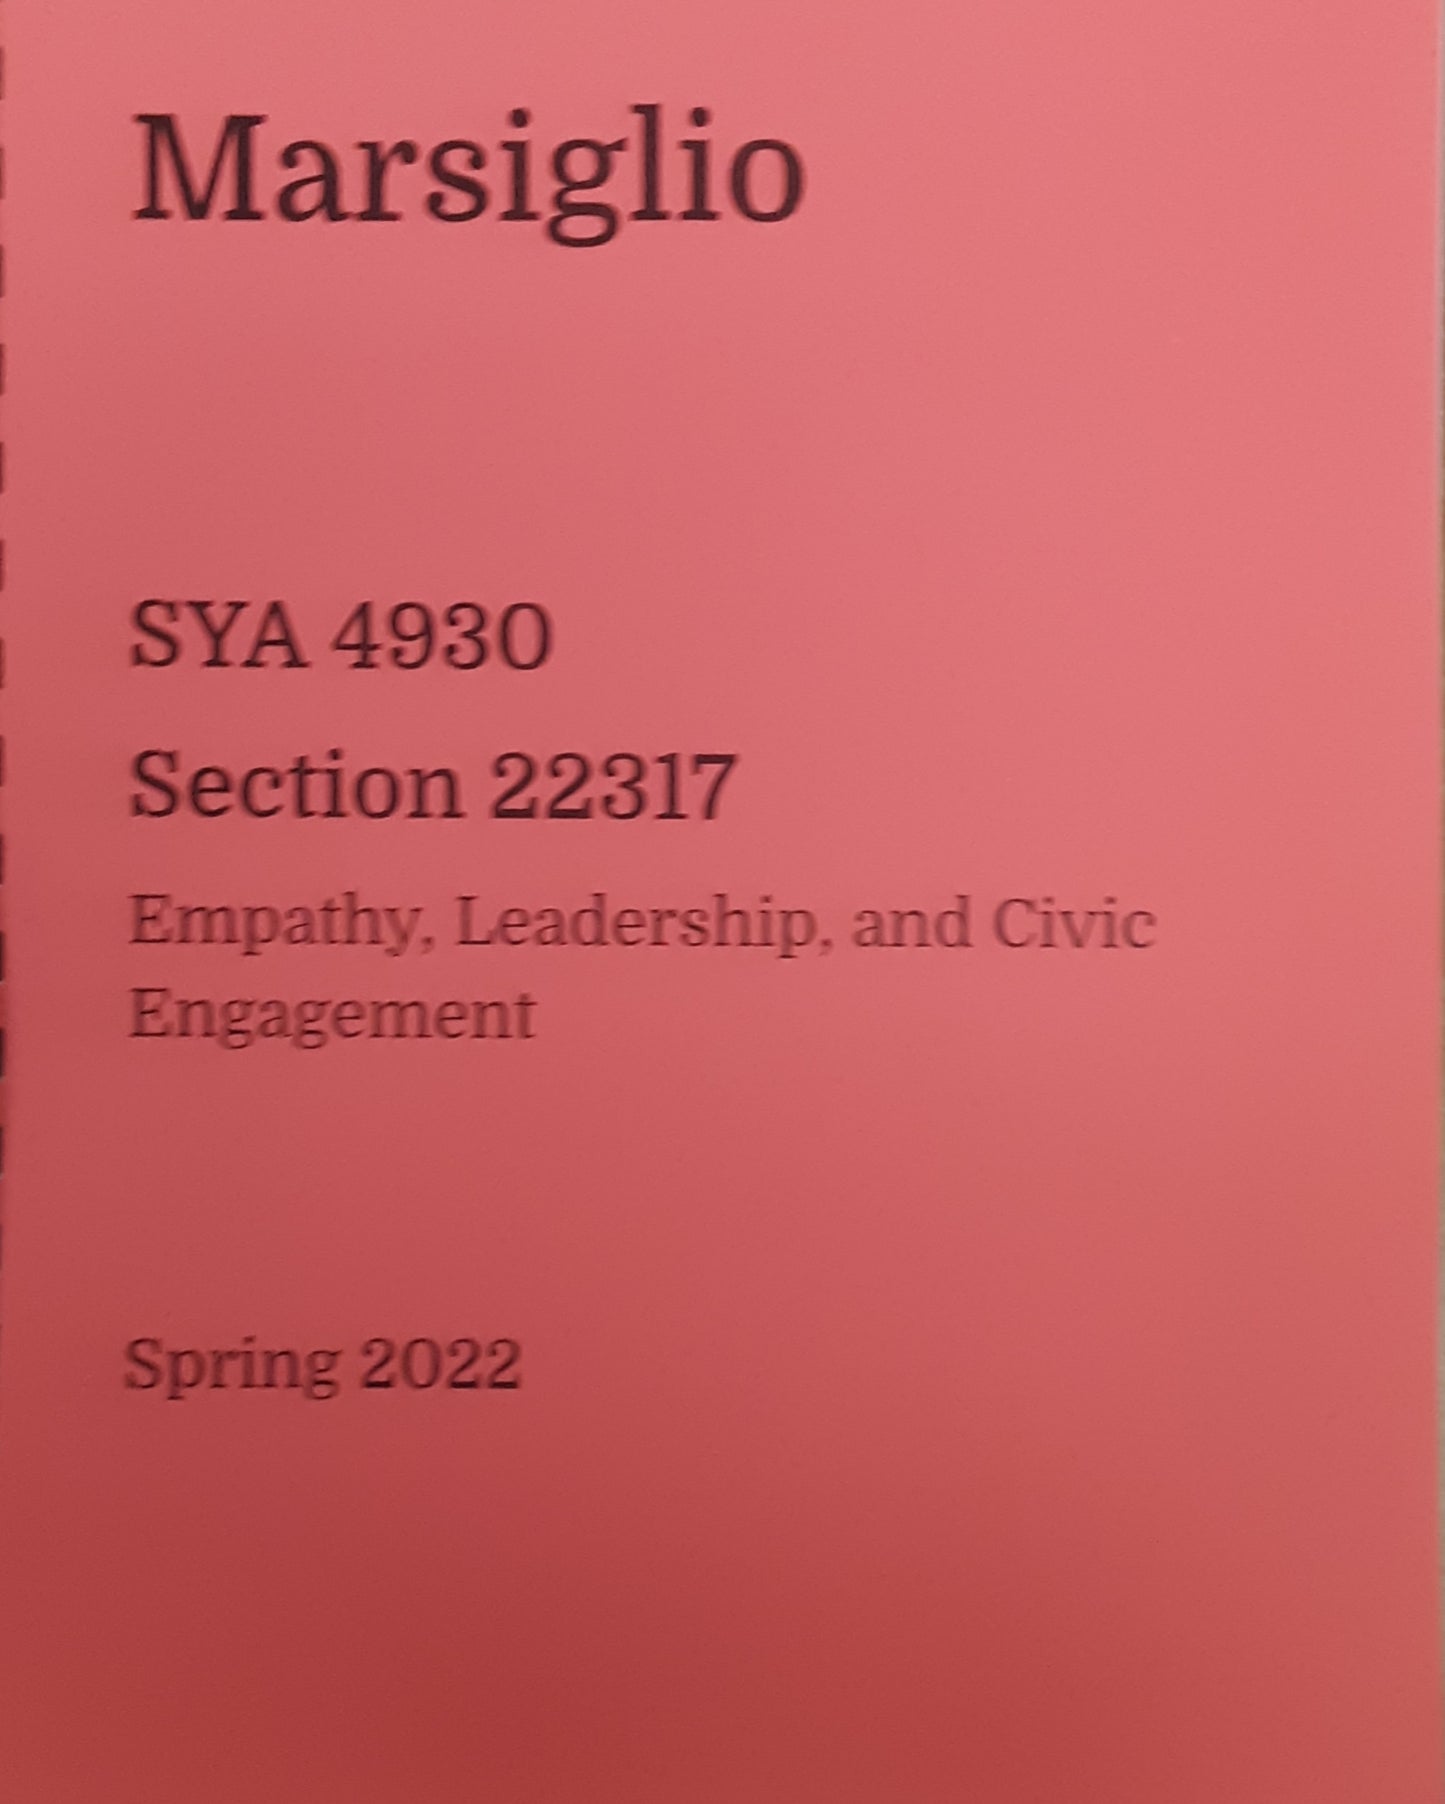 SYA 4930 Marsiglio Spring 2022